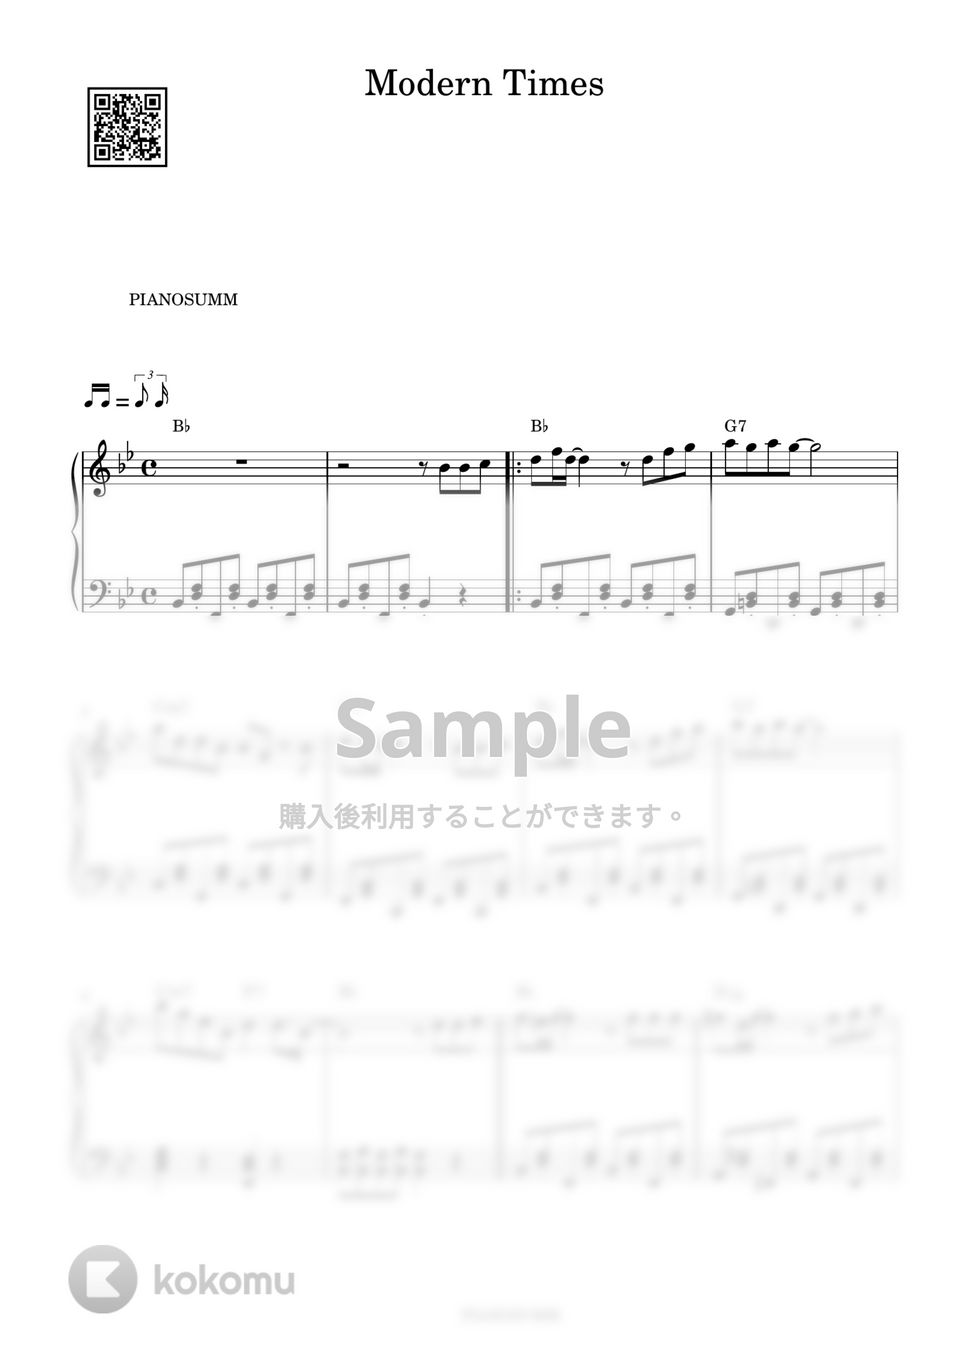 IU (아이유) - Modern Times (Includes Ckey) by PIANOSUMM